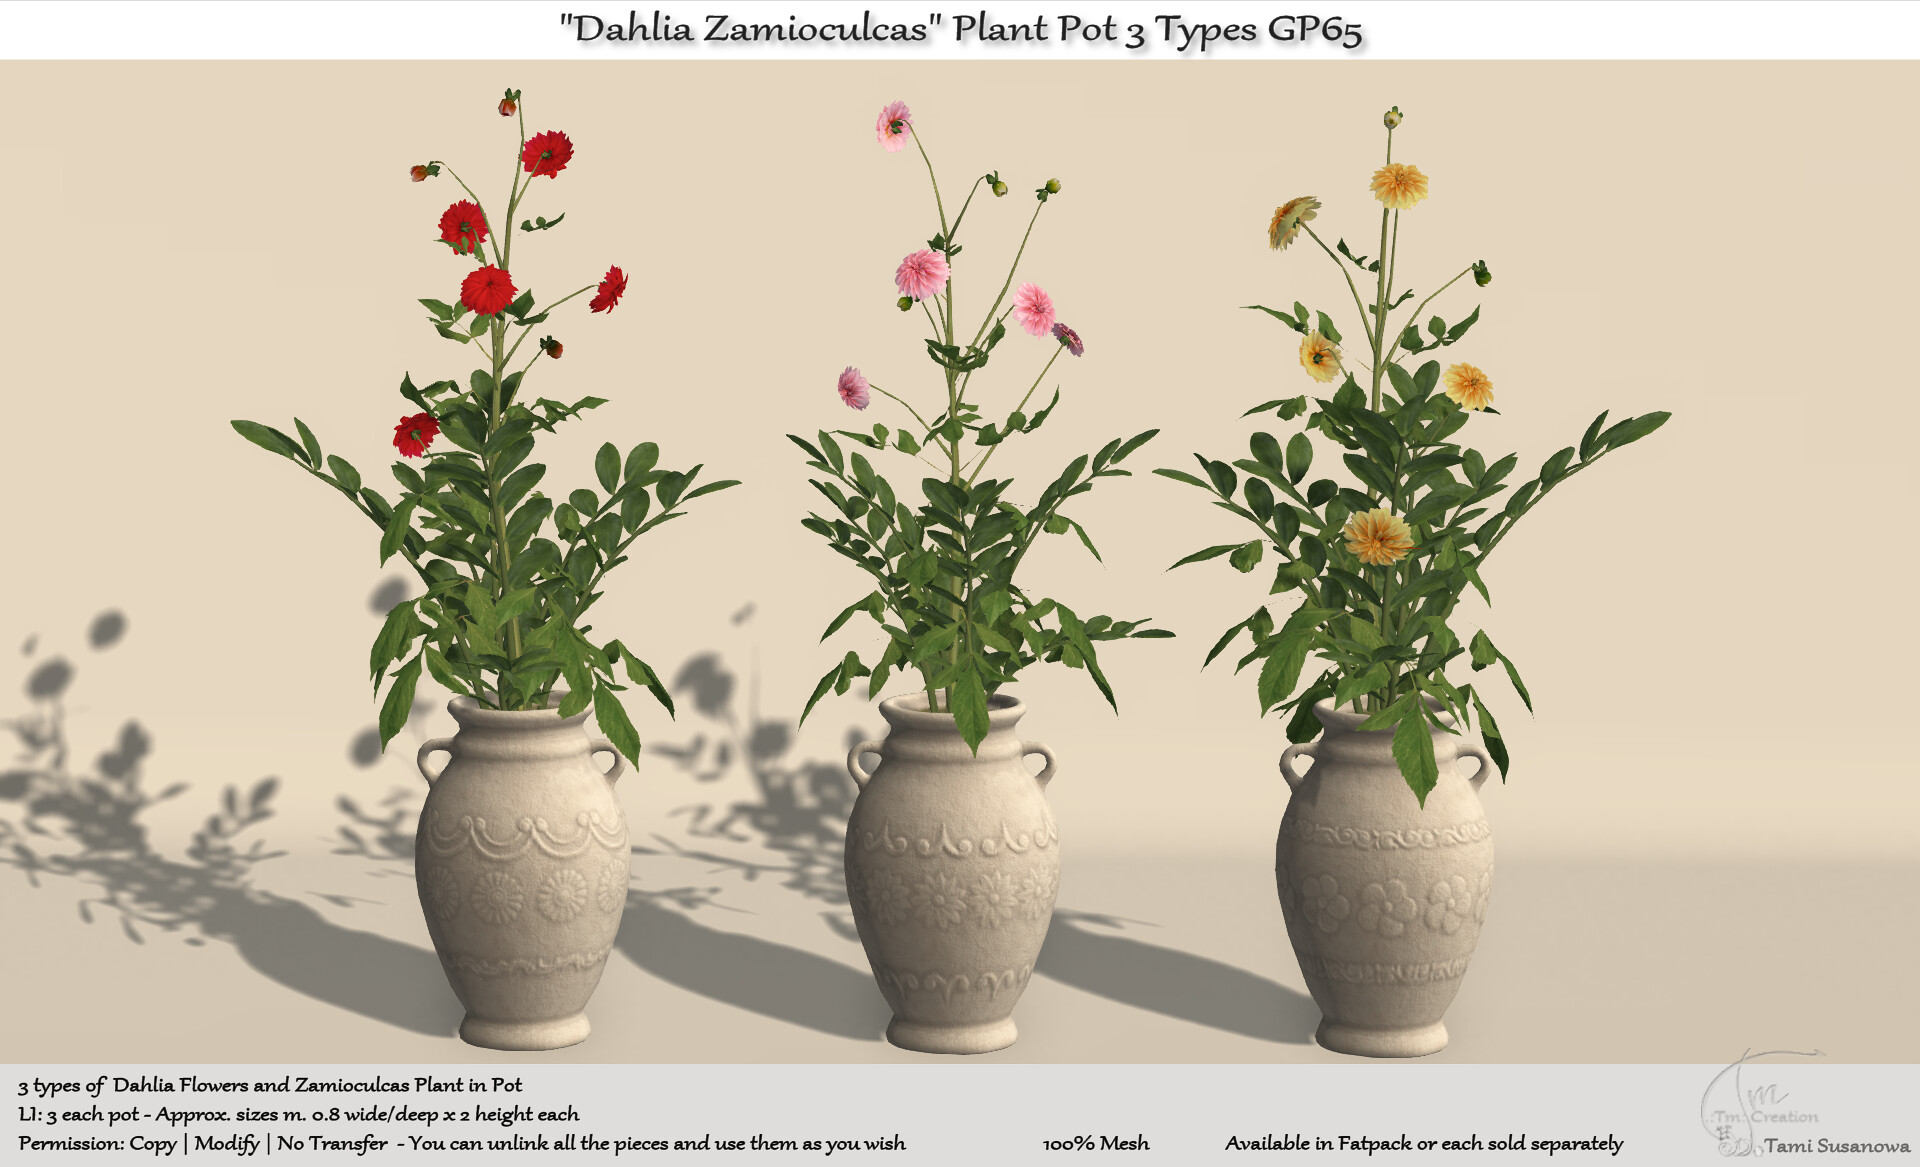 Tm Creation – “Dahlia Zamioculcas” Plant